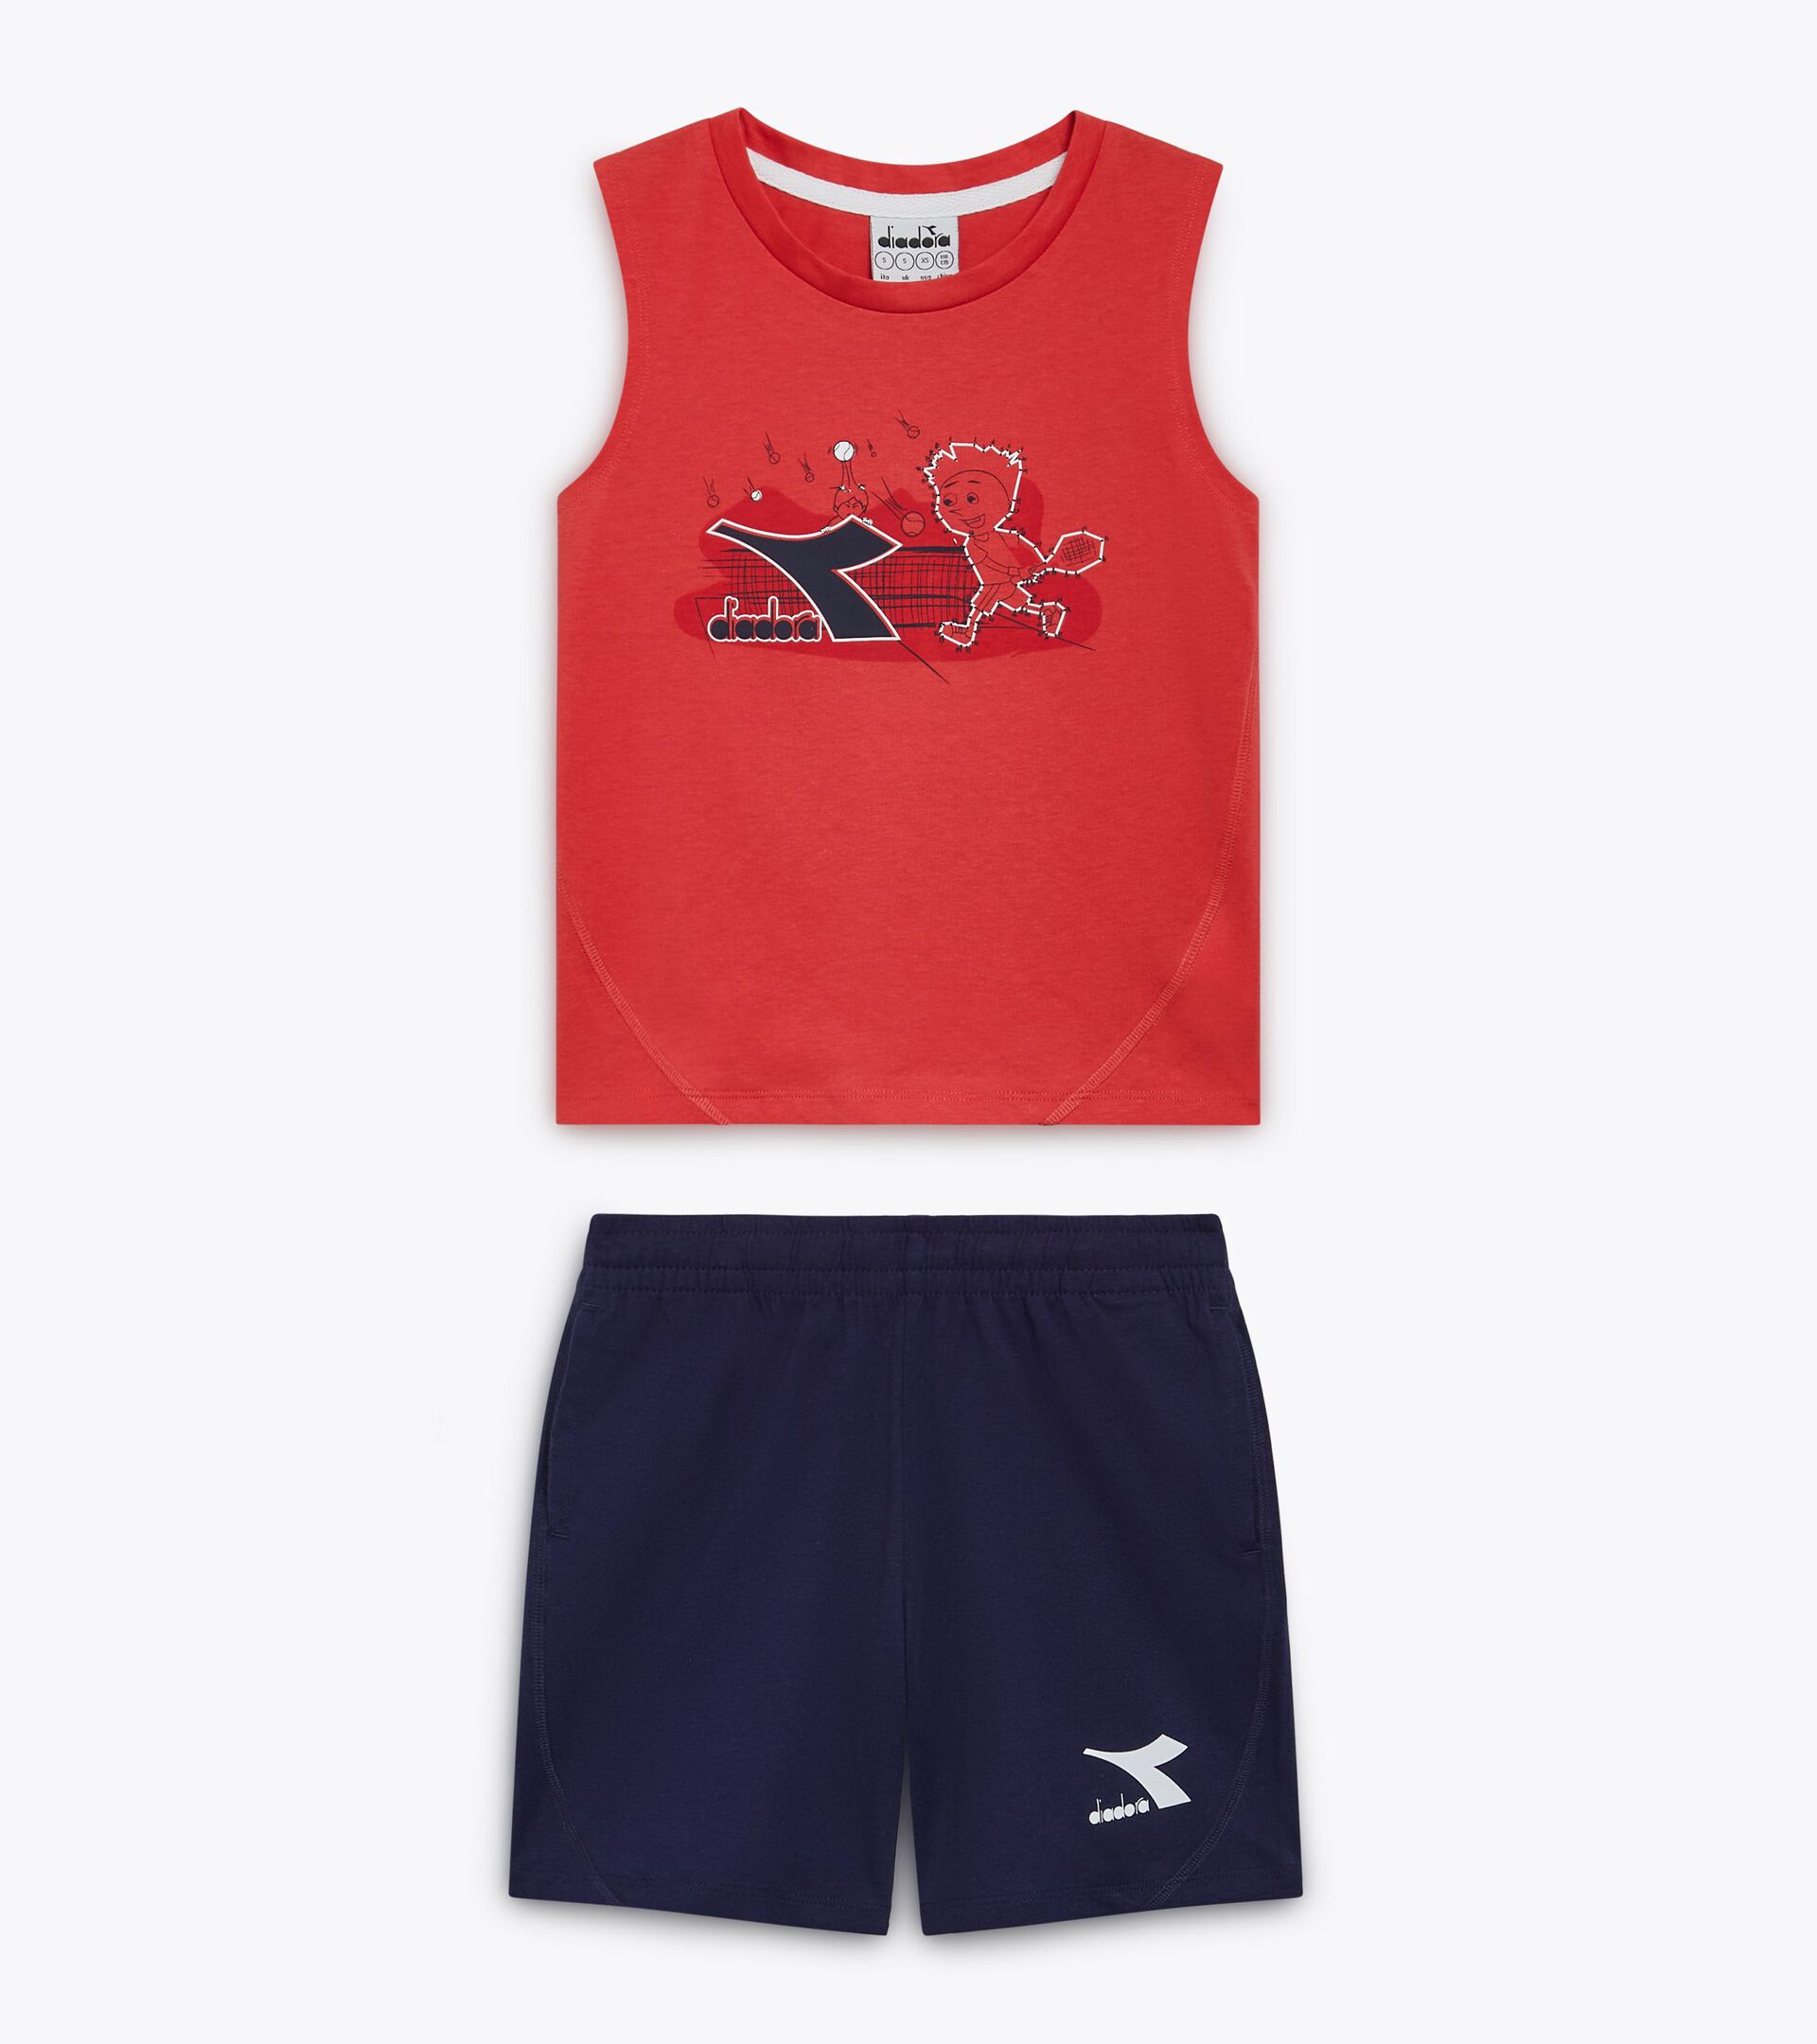 
Sports set - Tank top and shorts - Boy
 JB. SET SL RIDDLE CAYENNE RED - Diadora